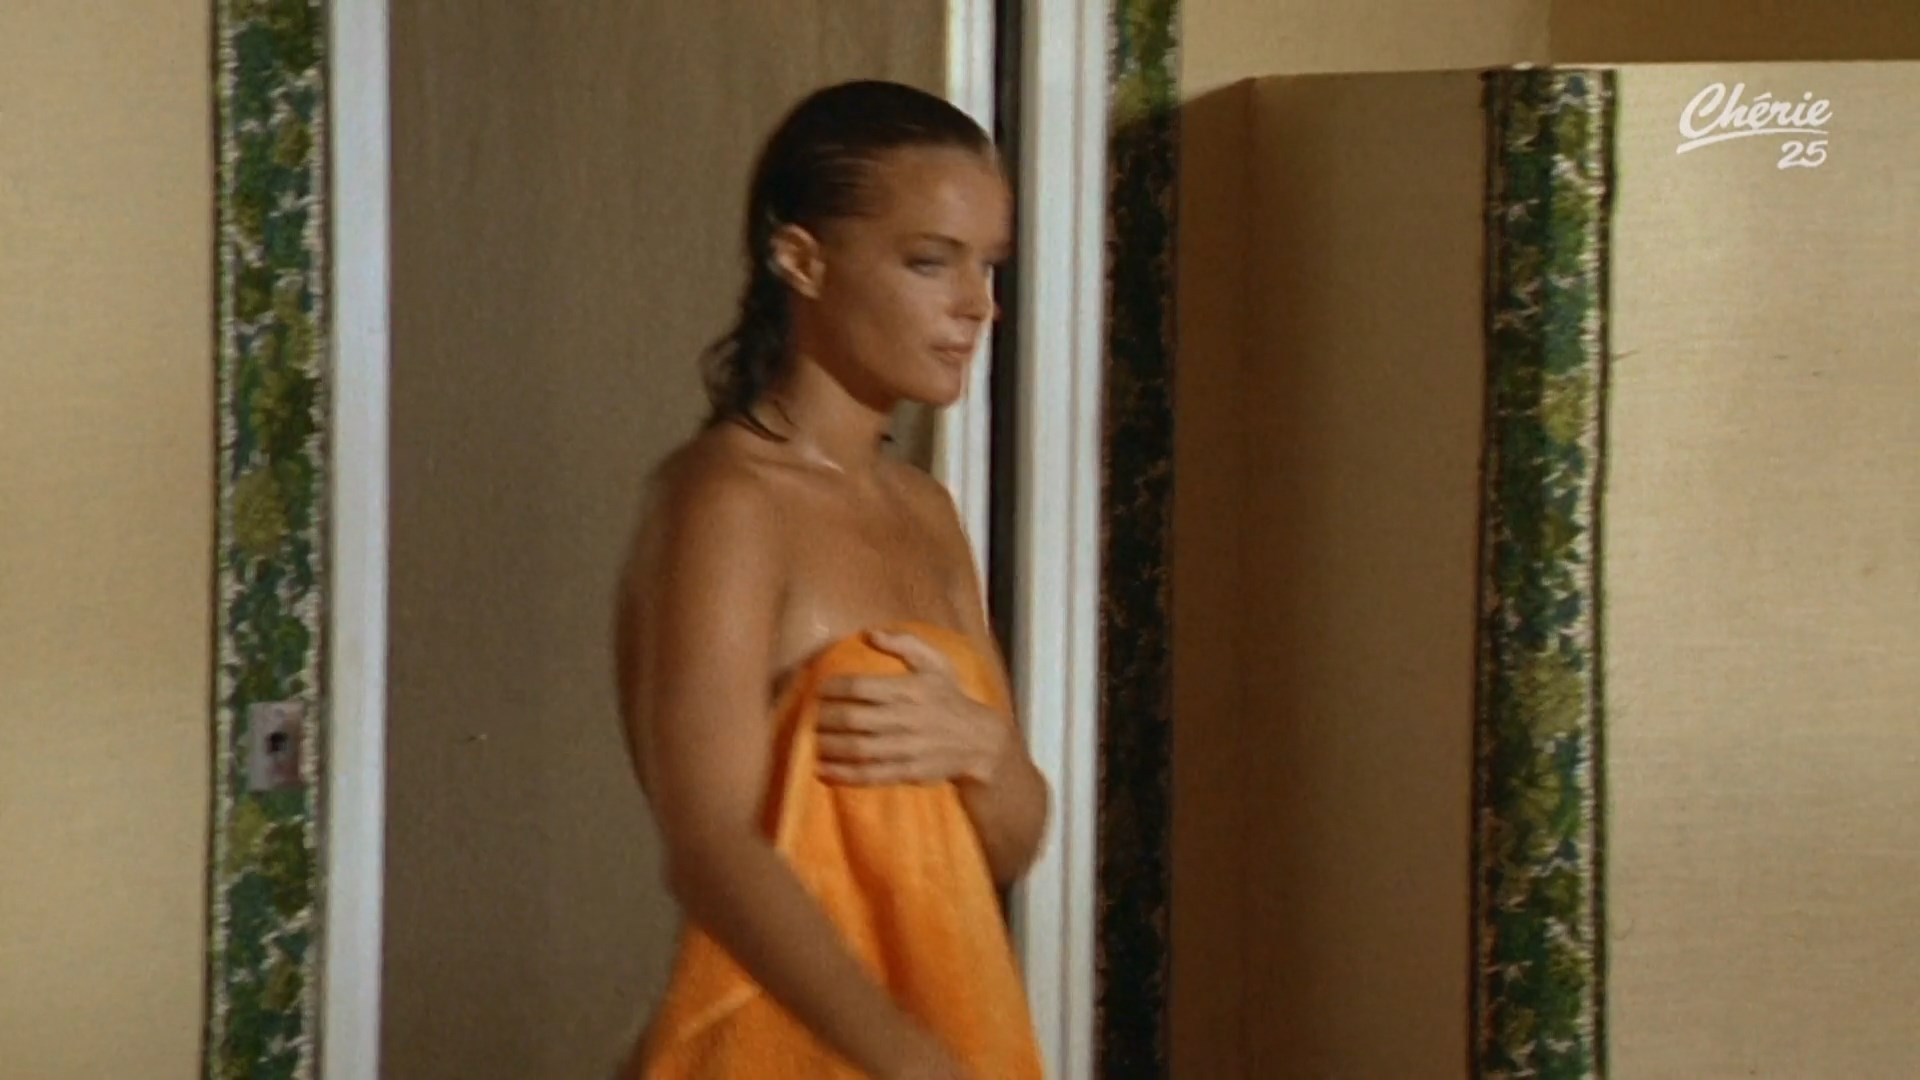 Nude Video Celebs Romy Schneider Nude La Piscine 1969